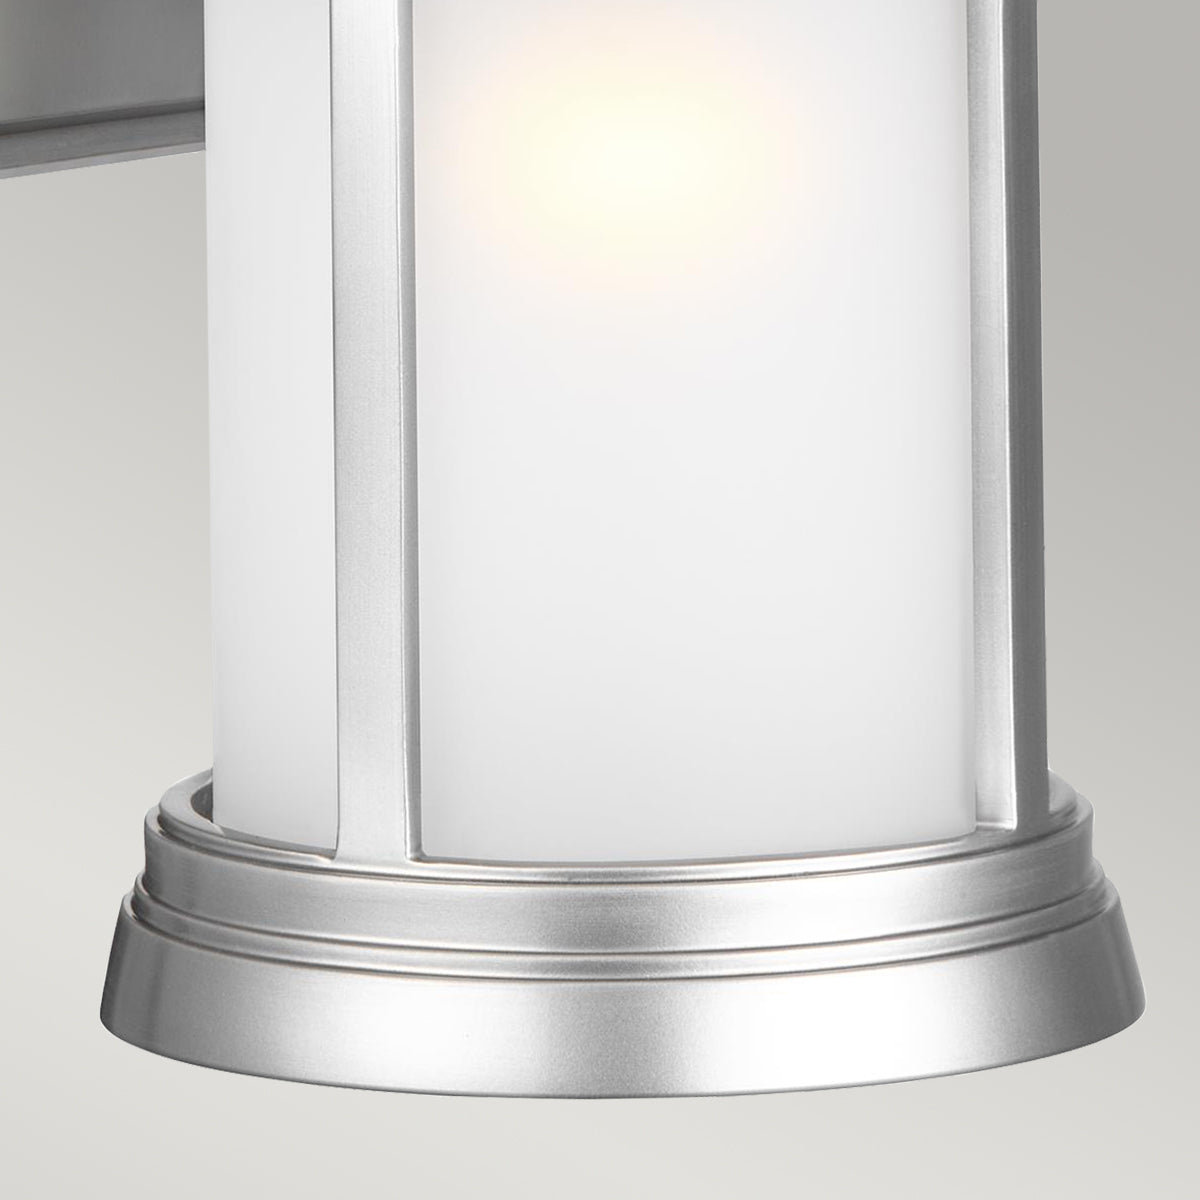 Newport Medium Wall Lantern – Brushed Steel